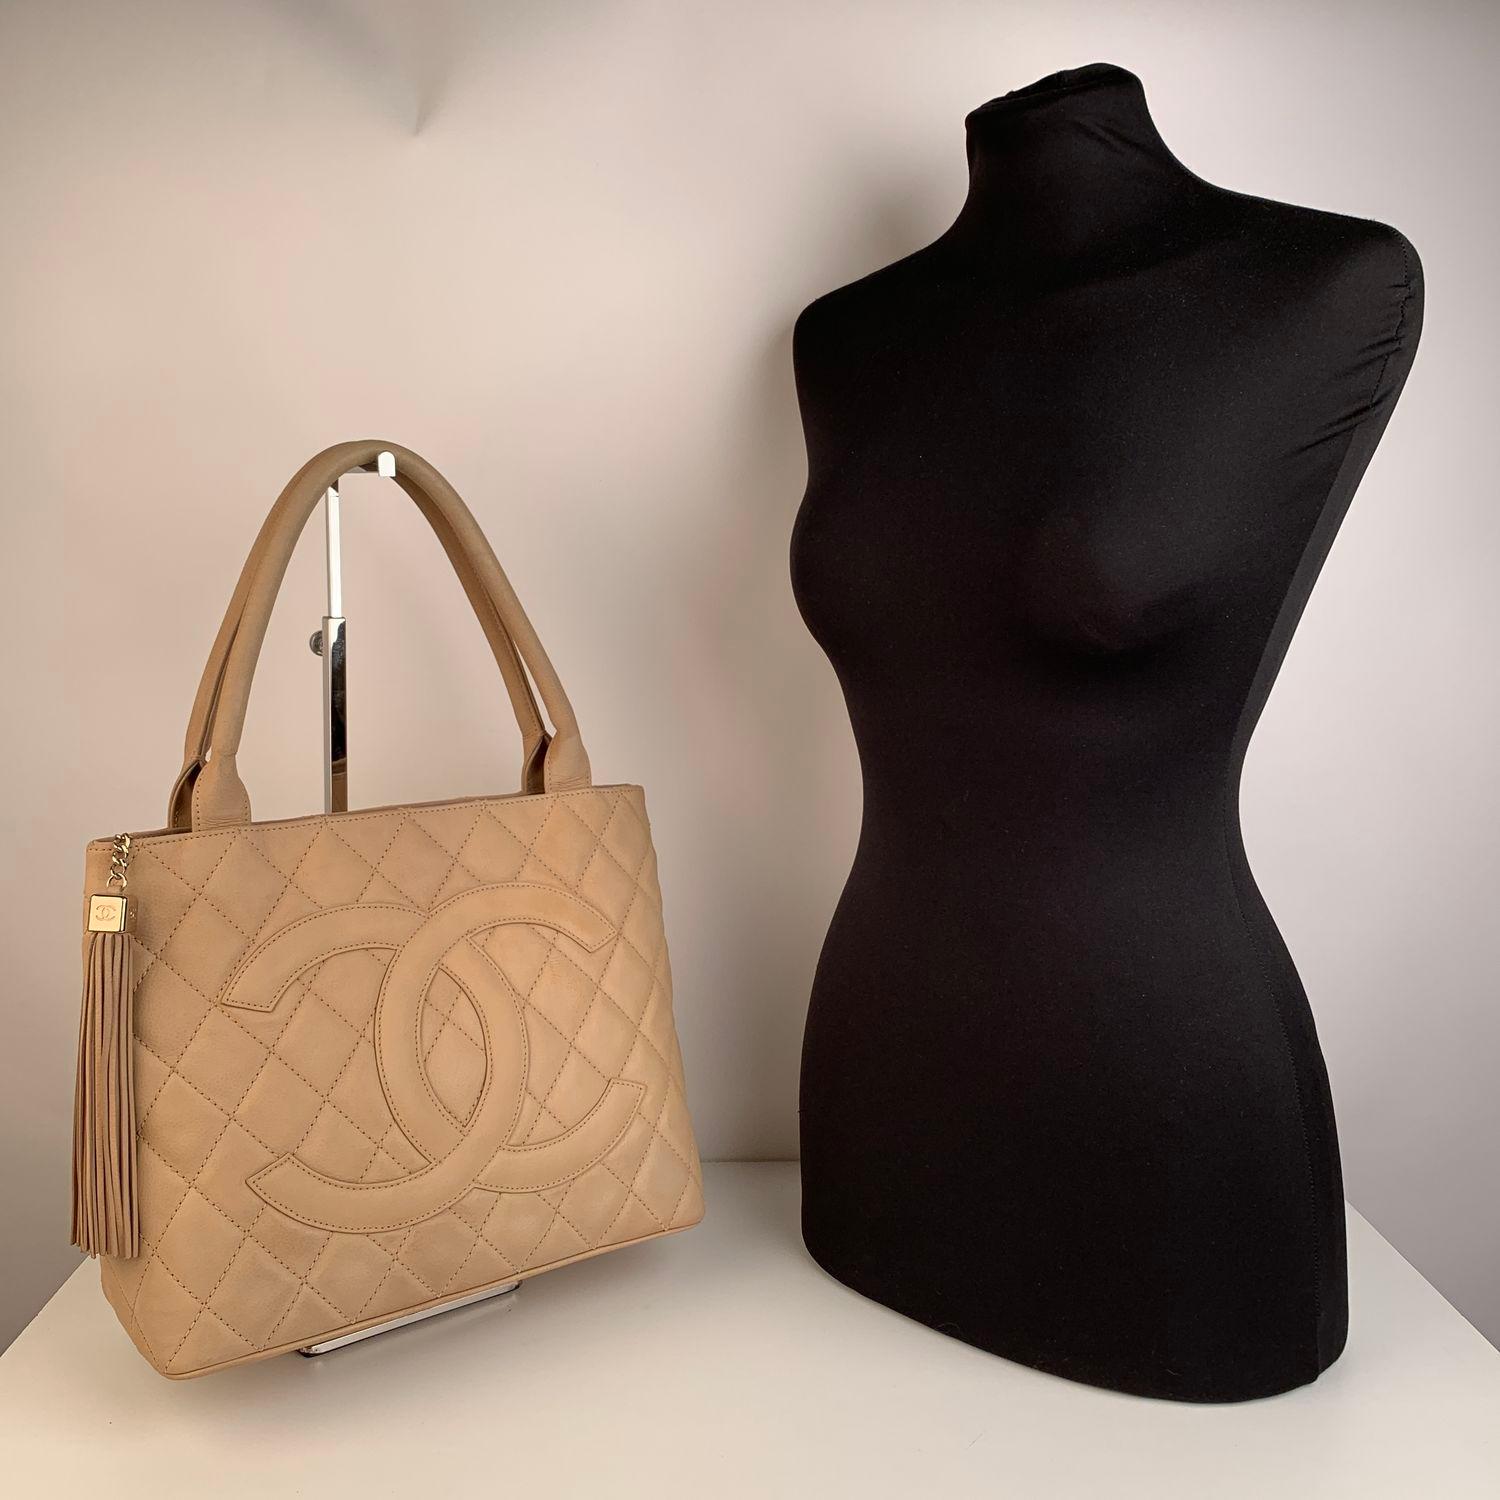 Chanel Beige Quilted Leather CC Logo Tote Shoulder Bag 1